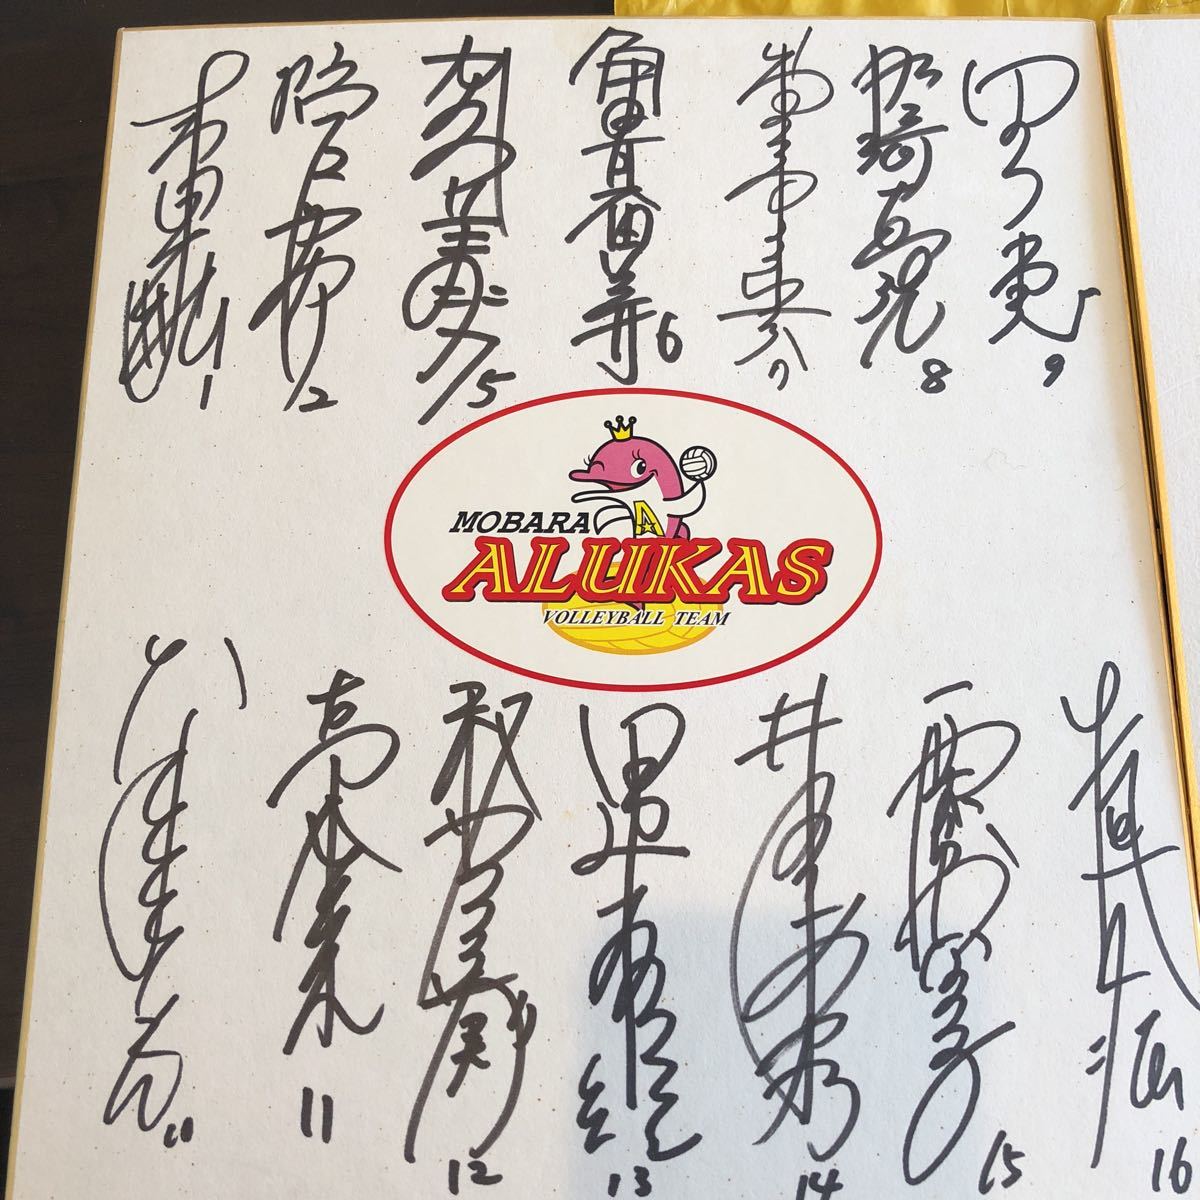  no. 11 раз V Lee g Osaka собрание автограф автограф волейбол MOBARA ALUKAS 2 шт. комплект 